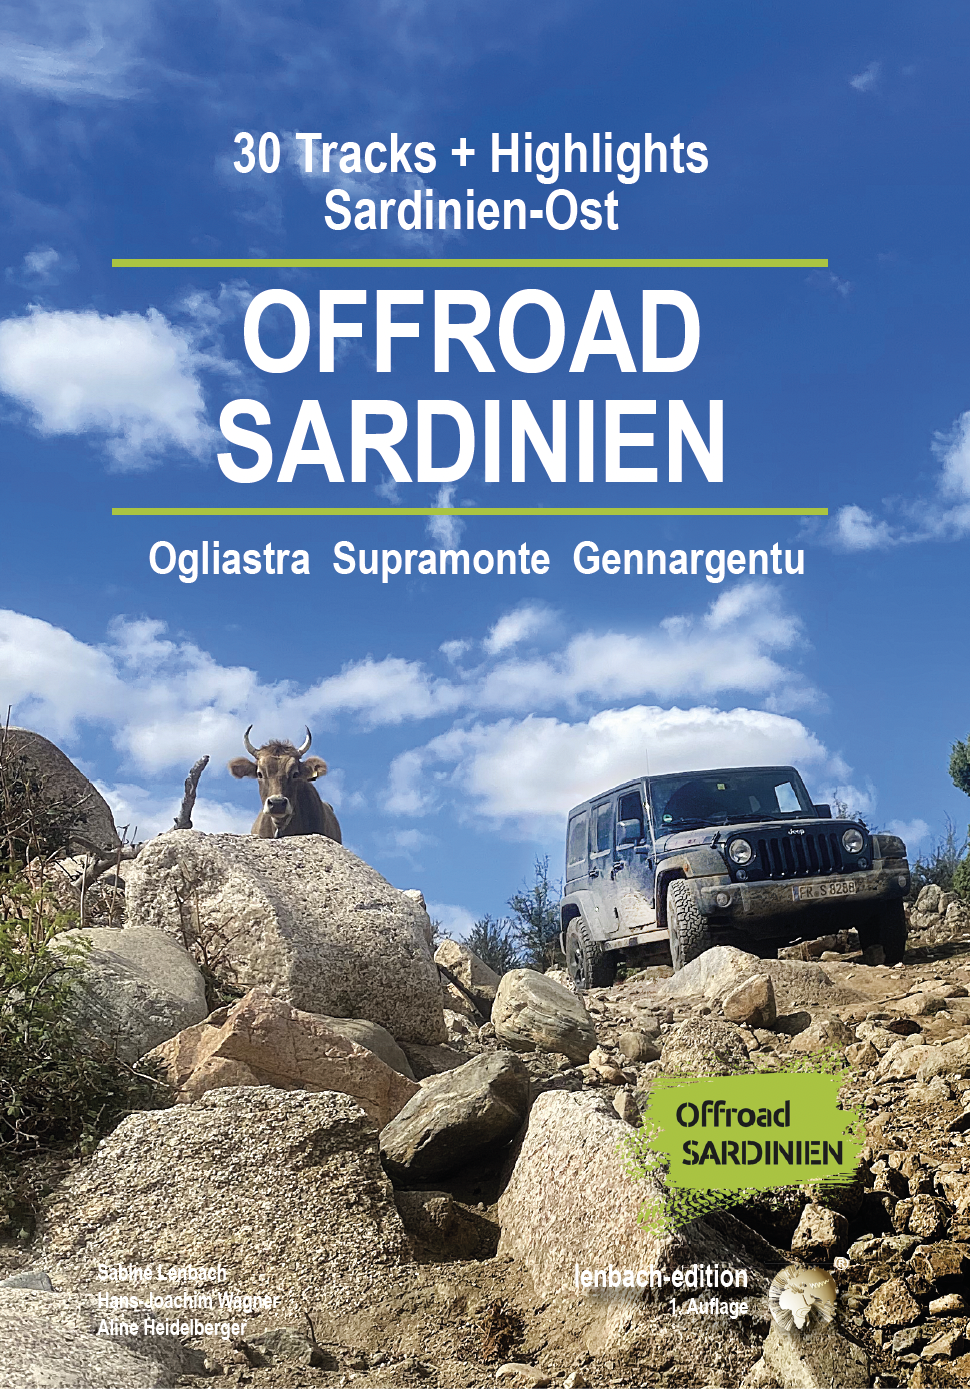 Offroad-Sardinien-lenbach-edition-2